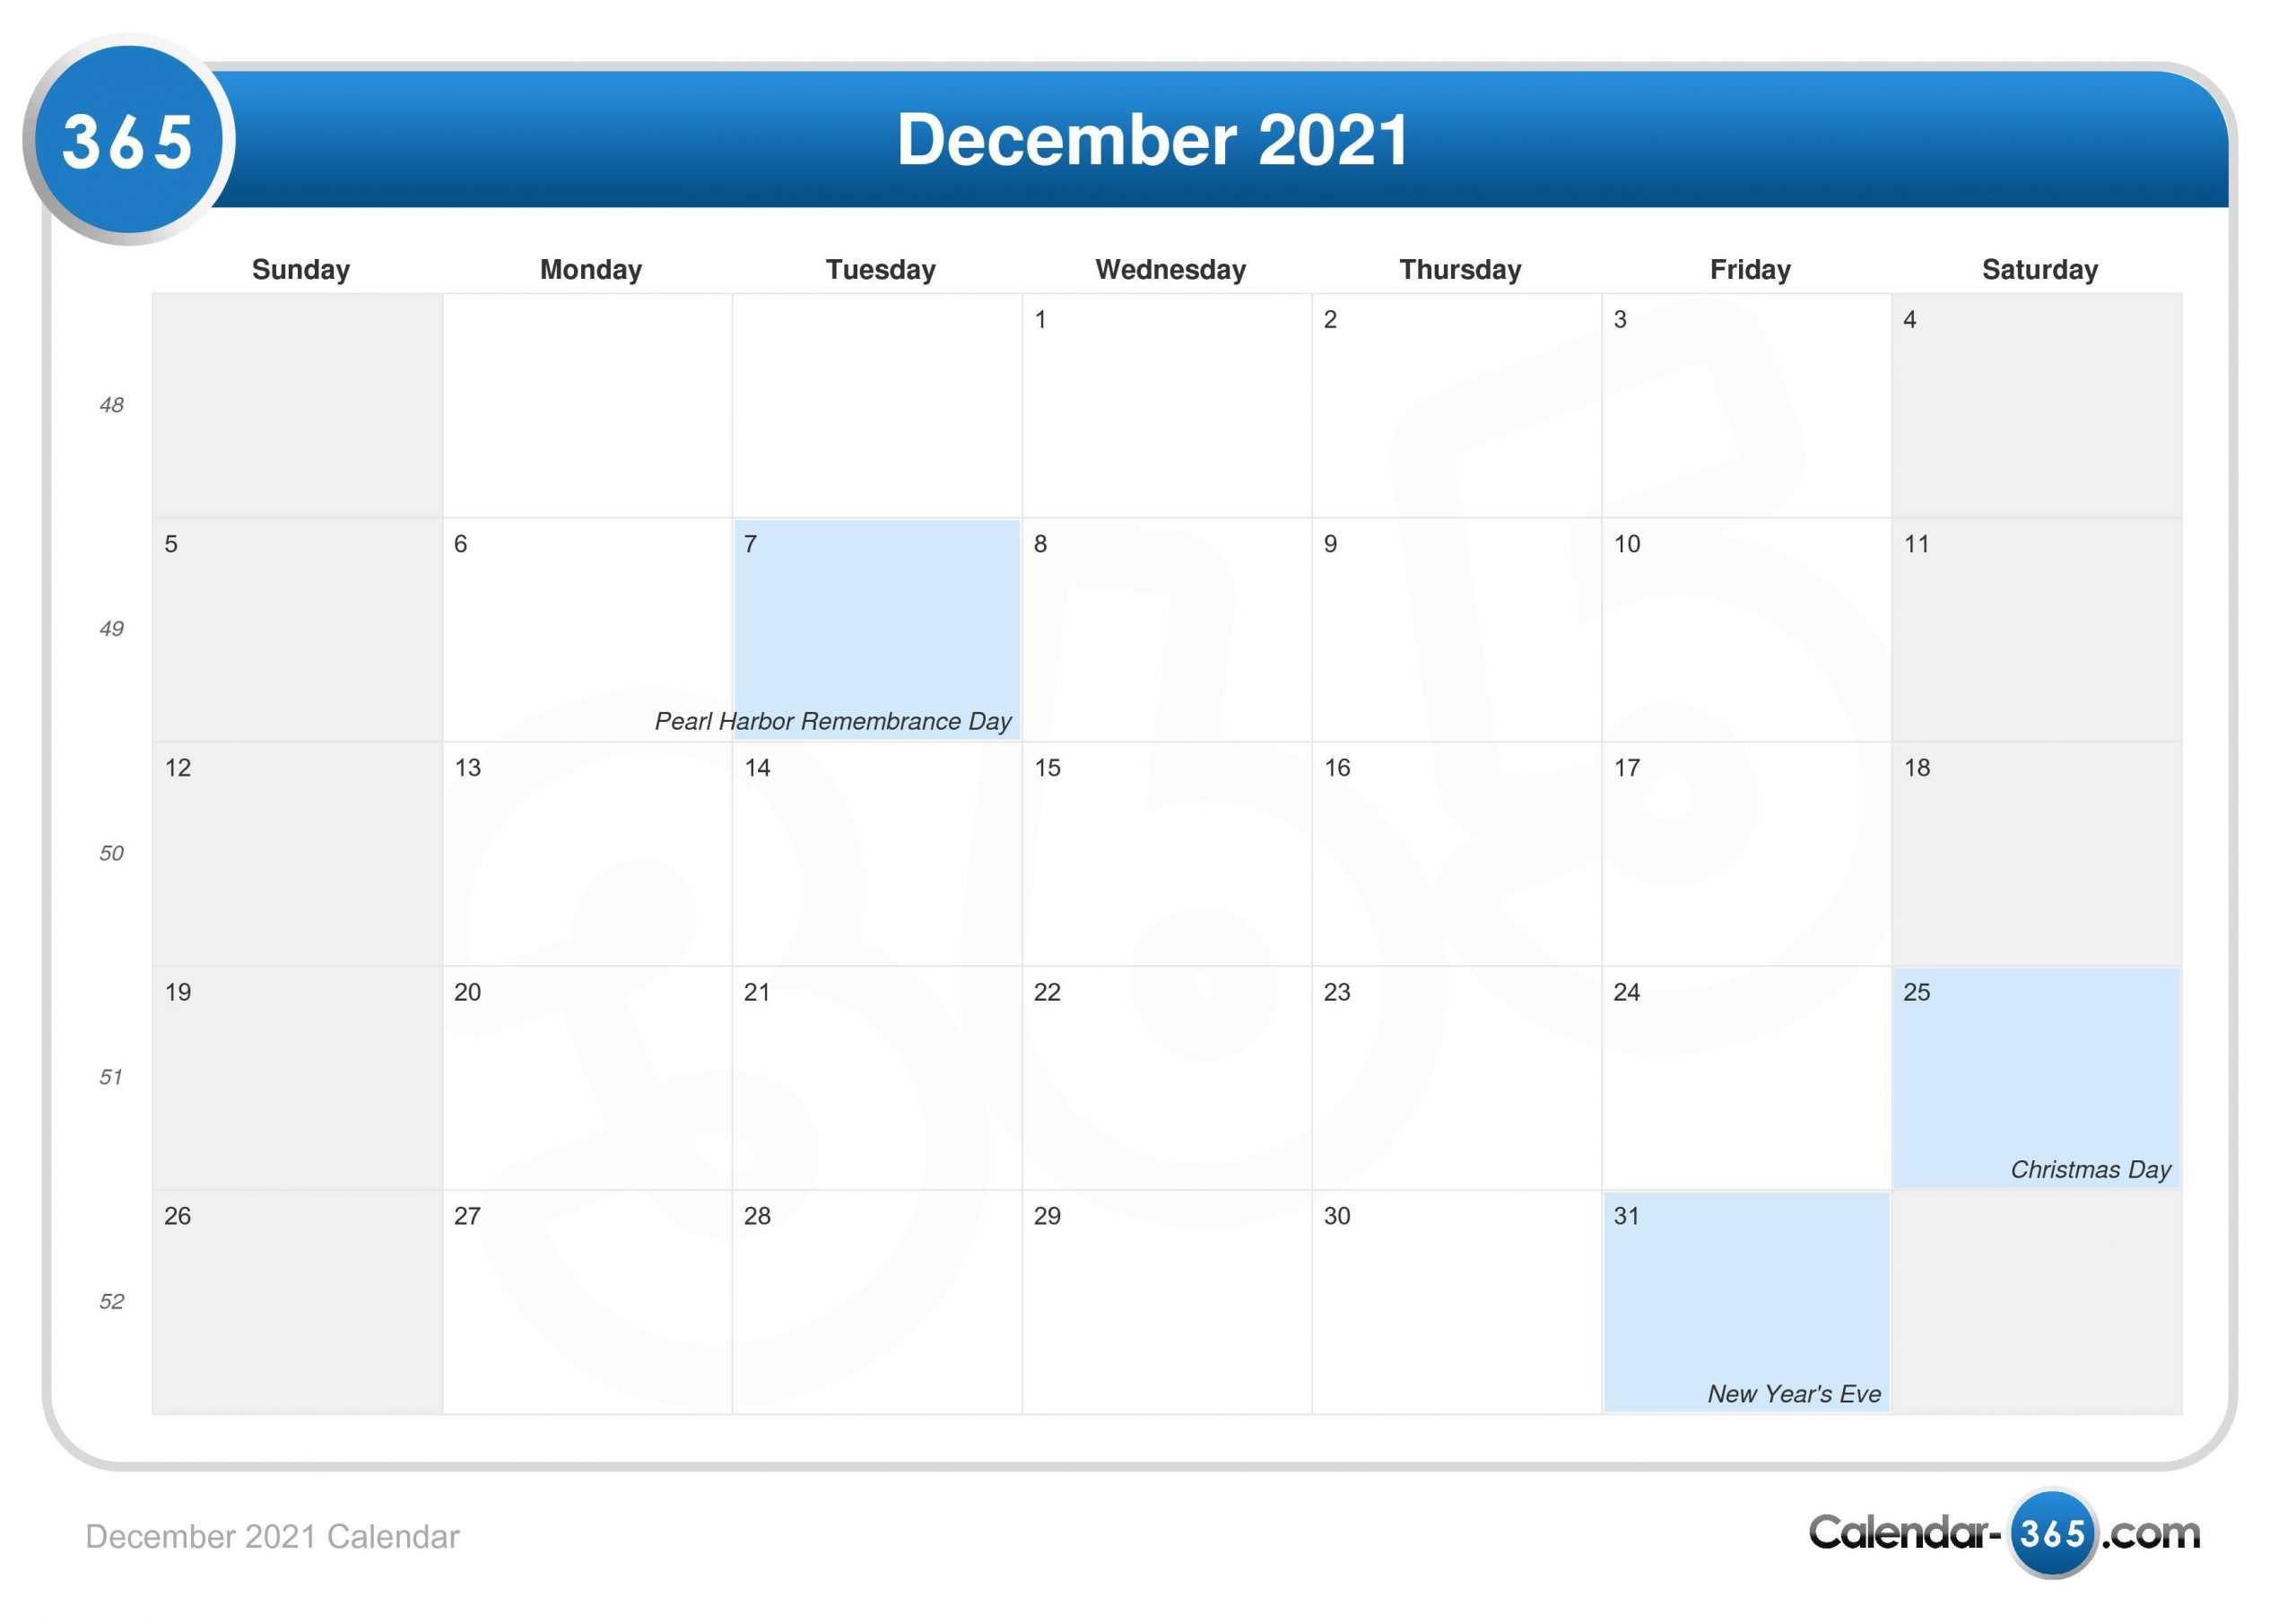 December 2021 Calendar December 2021 Calendar Image